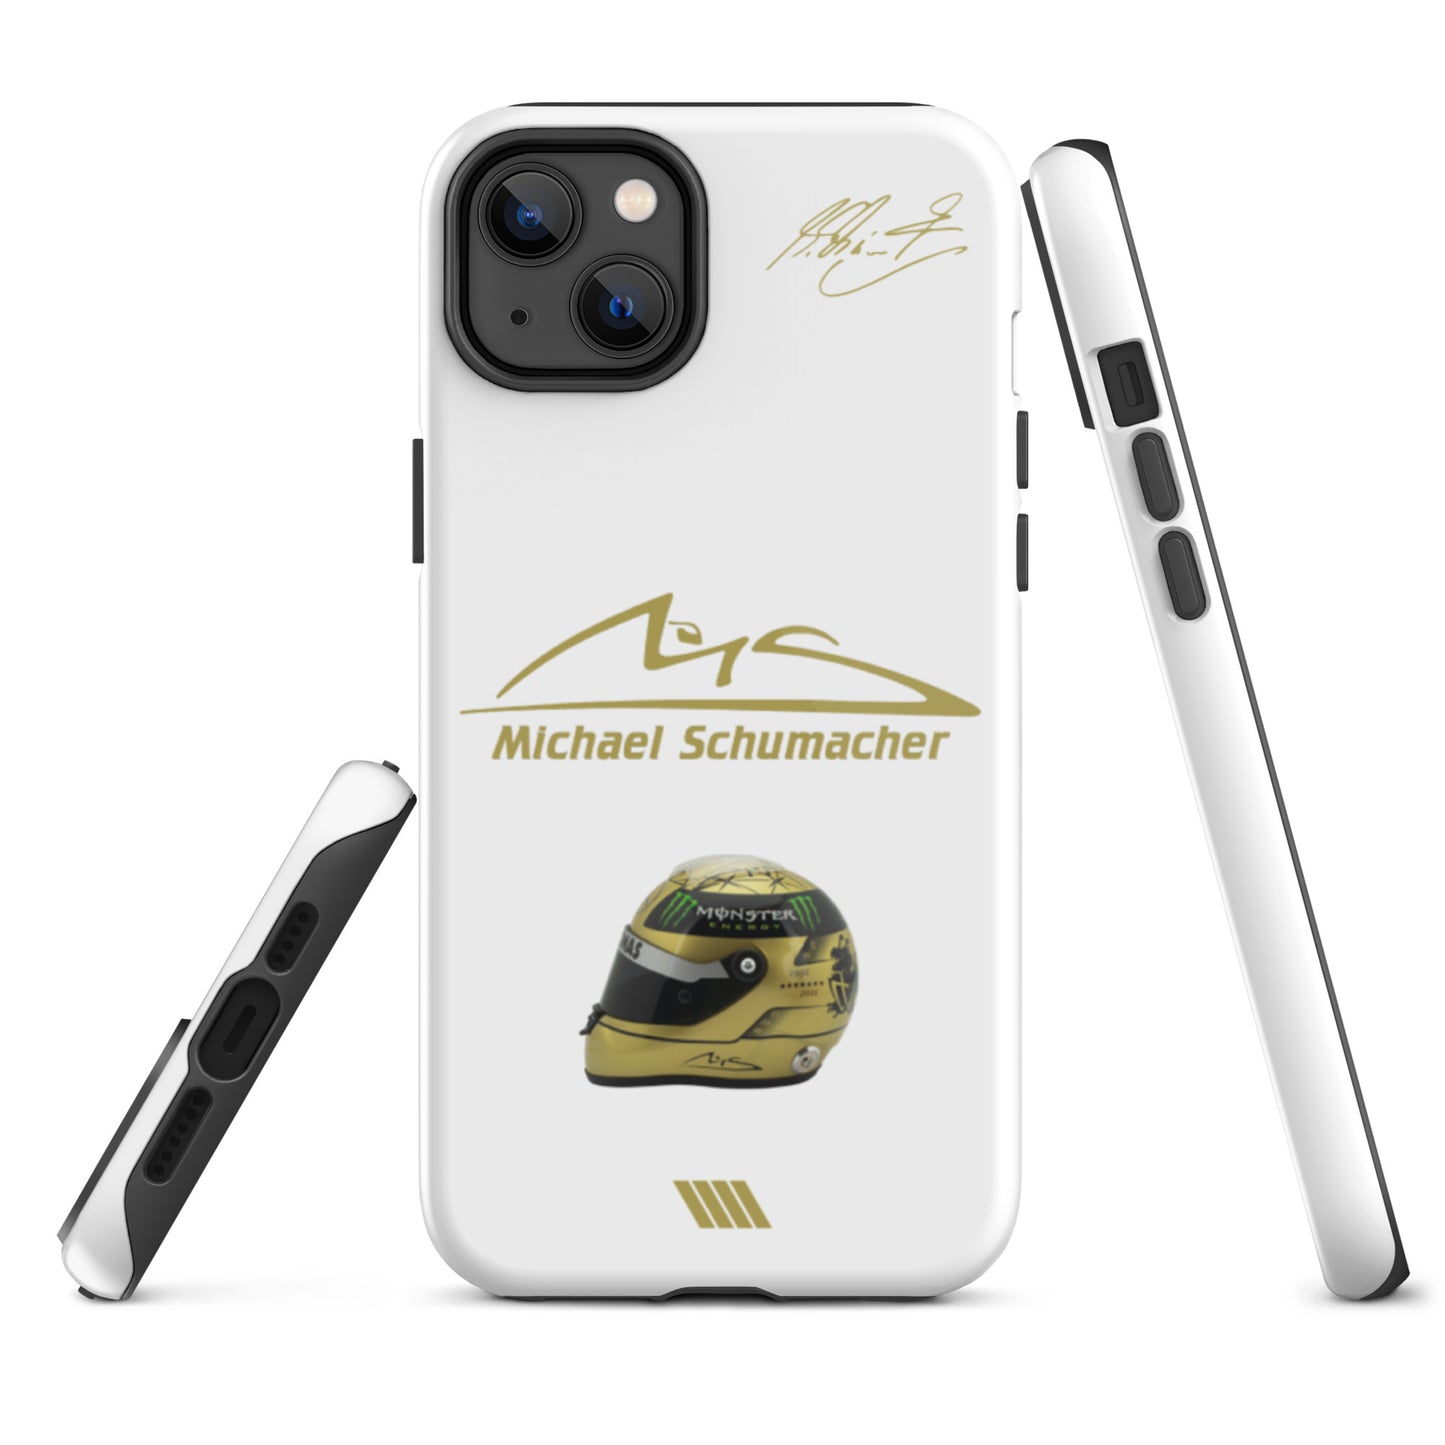 Michael Schumacher Tough iPhone case